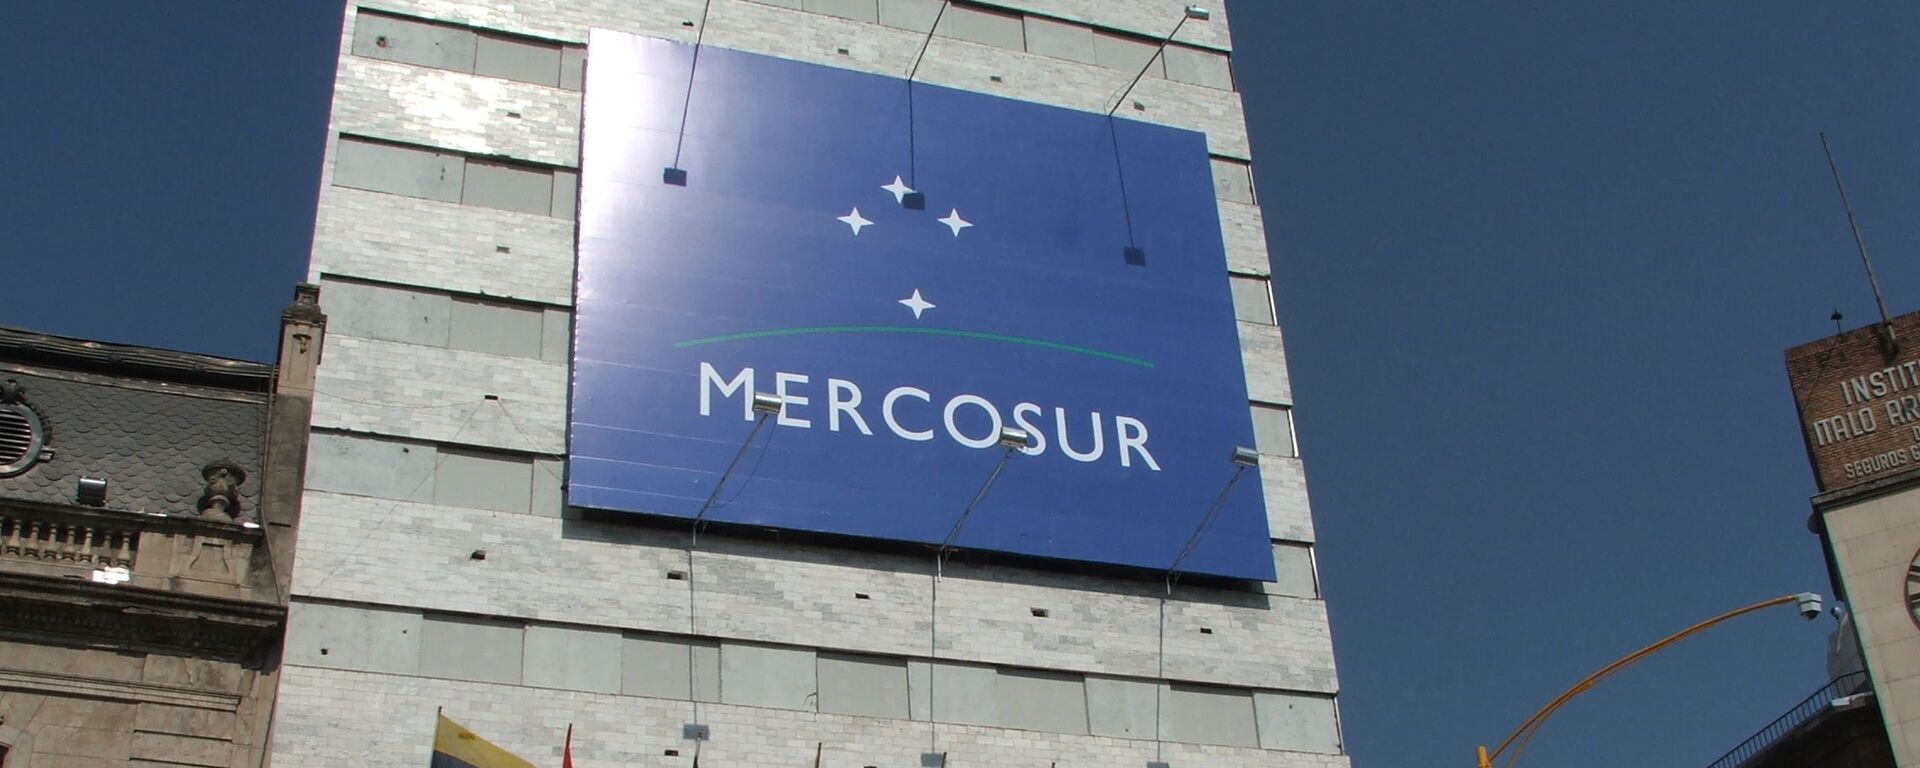 Sede de Mercosur - Sputnik Mundo, 1920, 07.07.2021